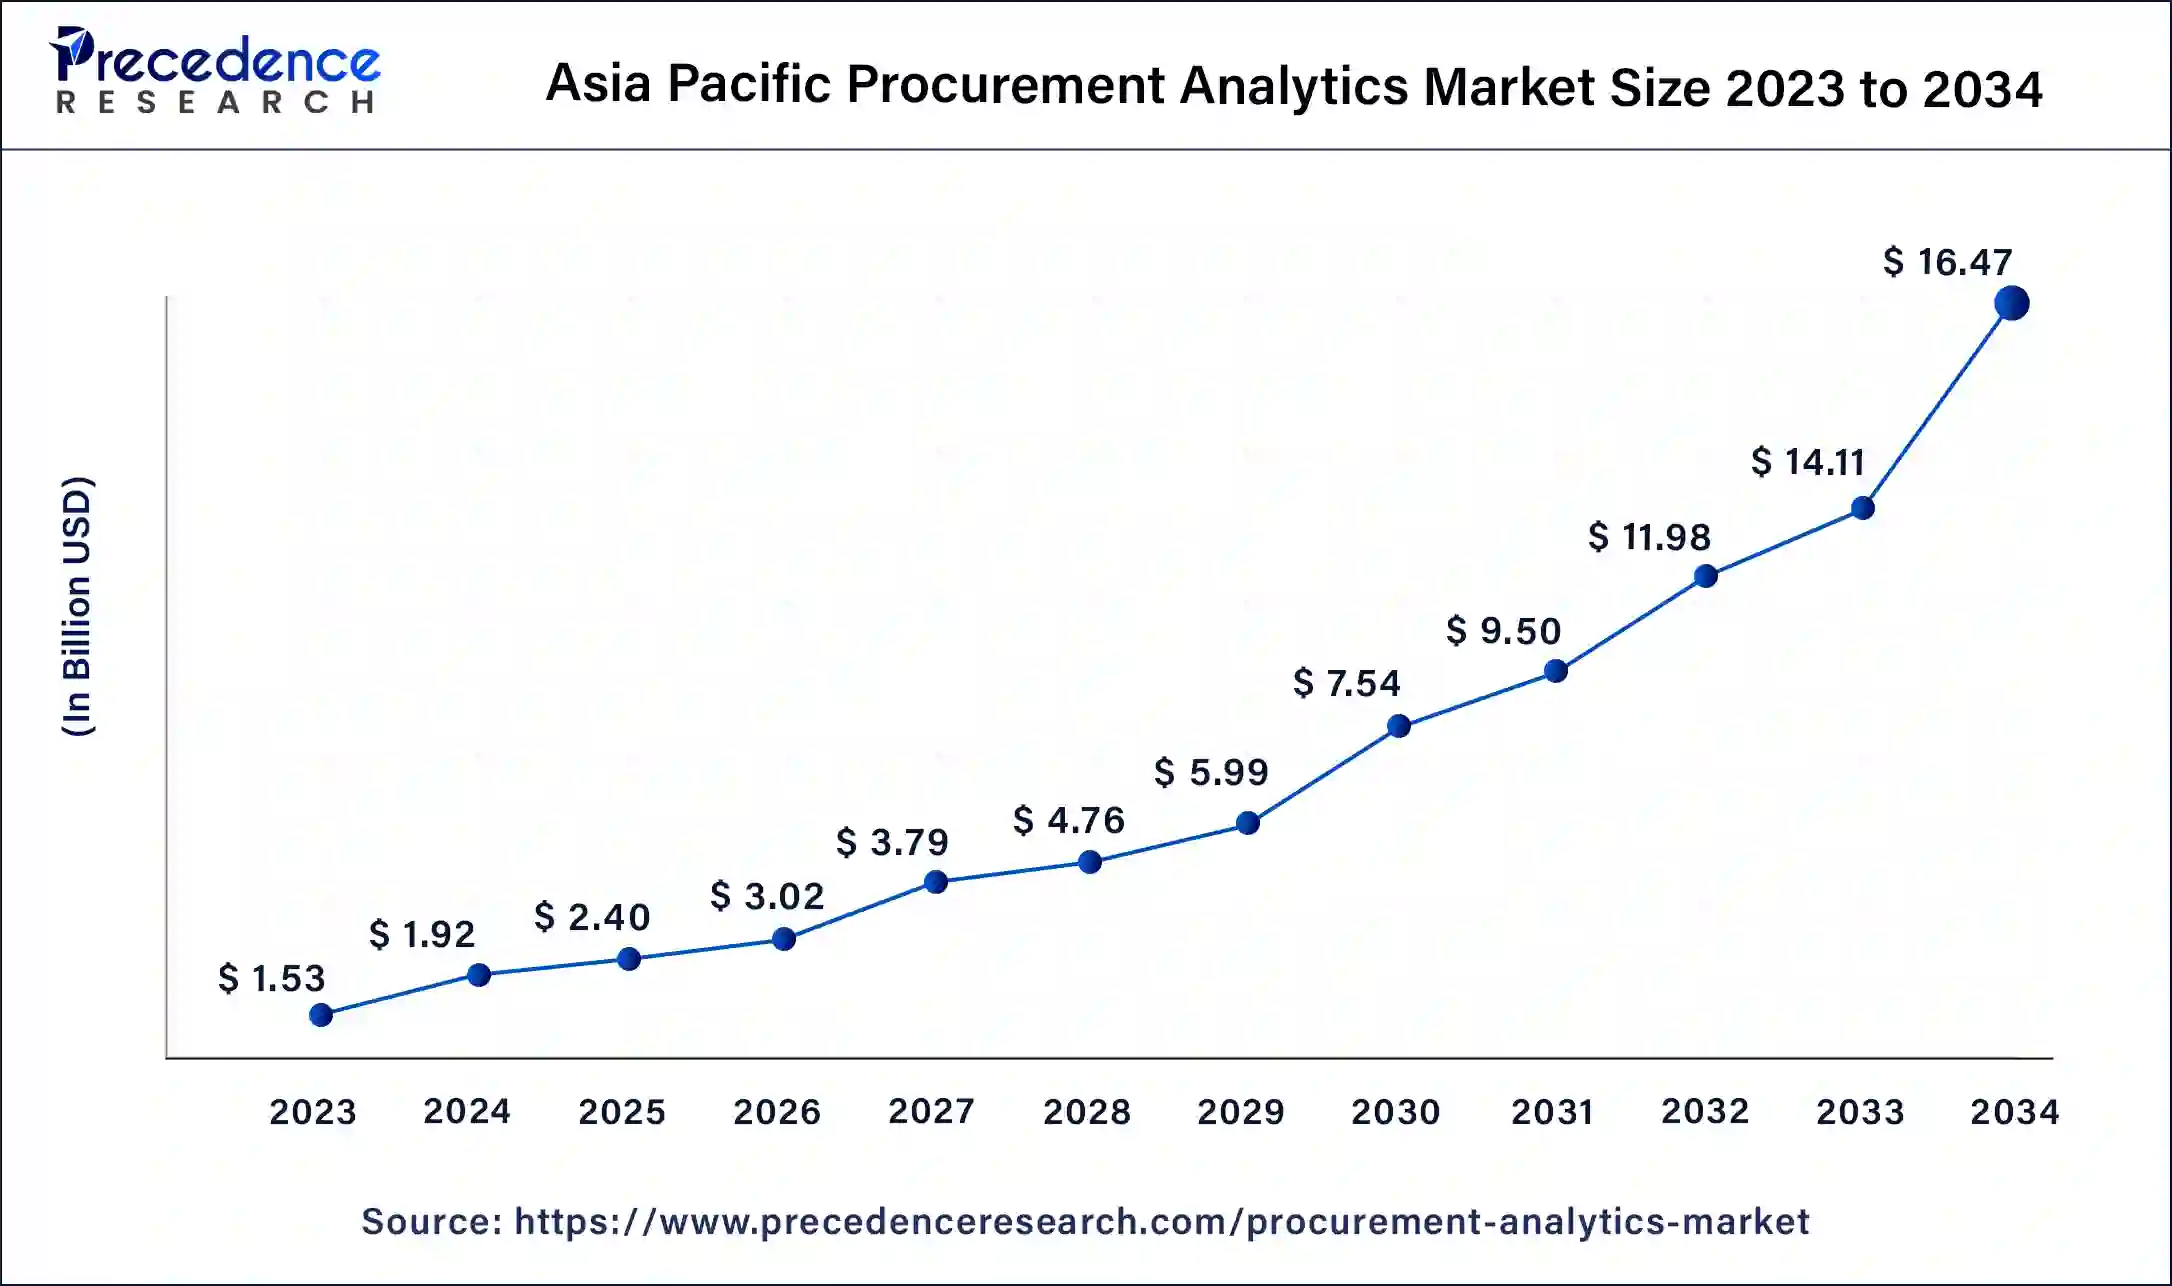 Asia Pacific Procurement Analytics Market Size 2024 to 2034